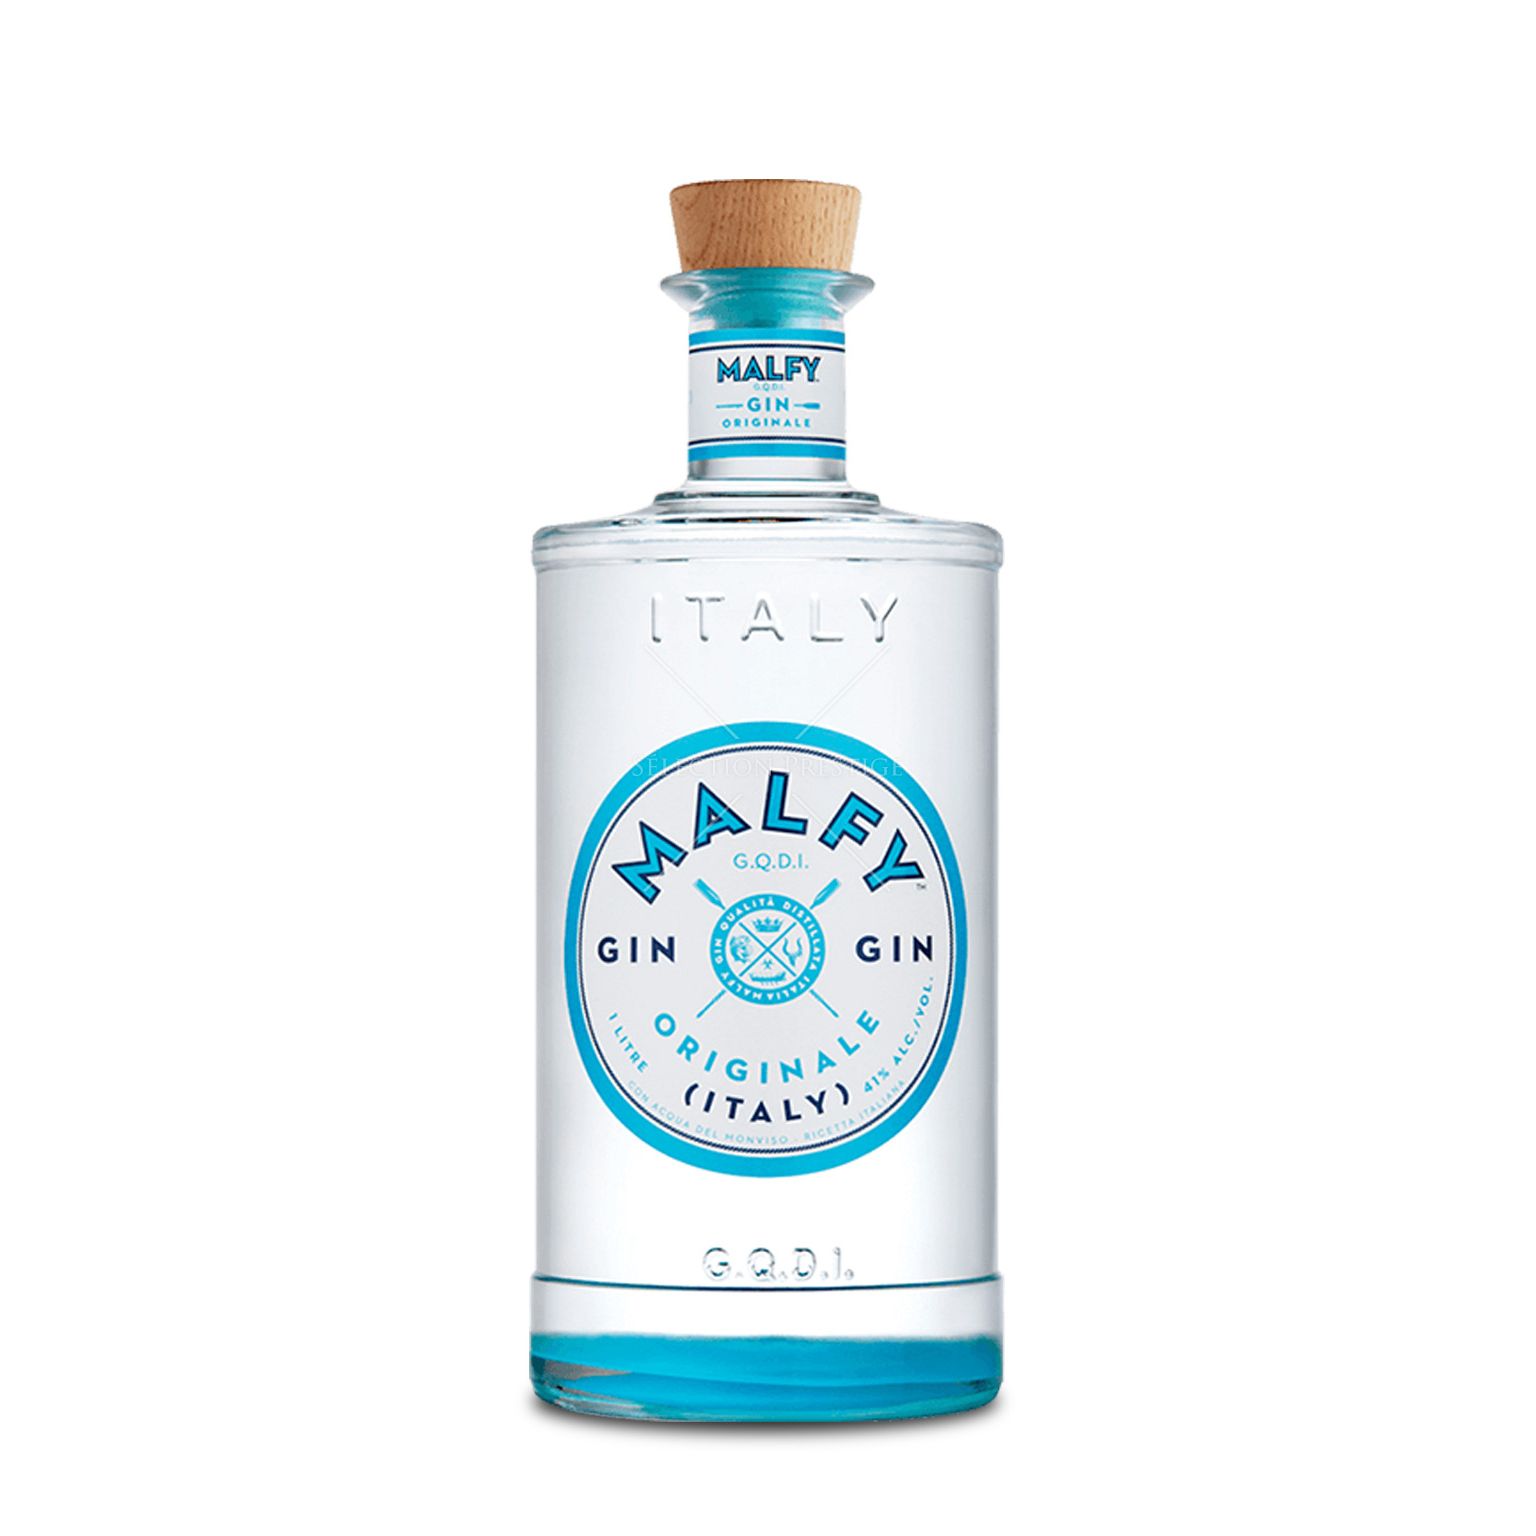 Malfy Originale Gin – 700ml